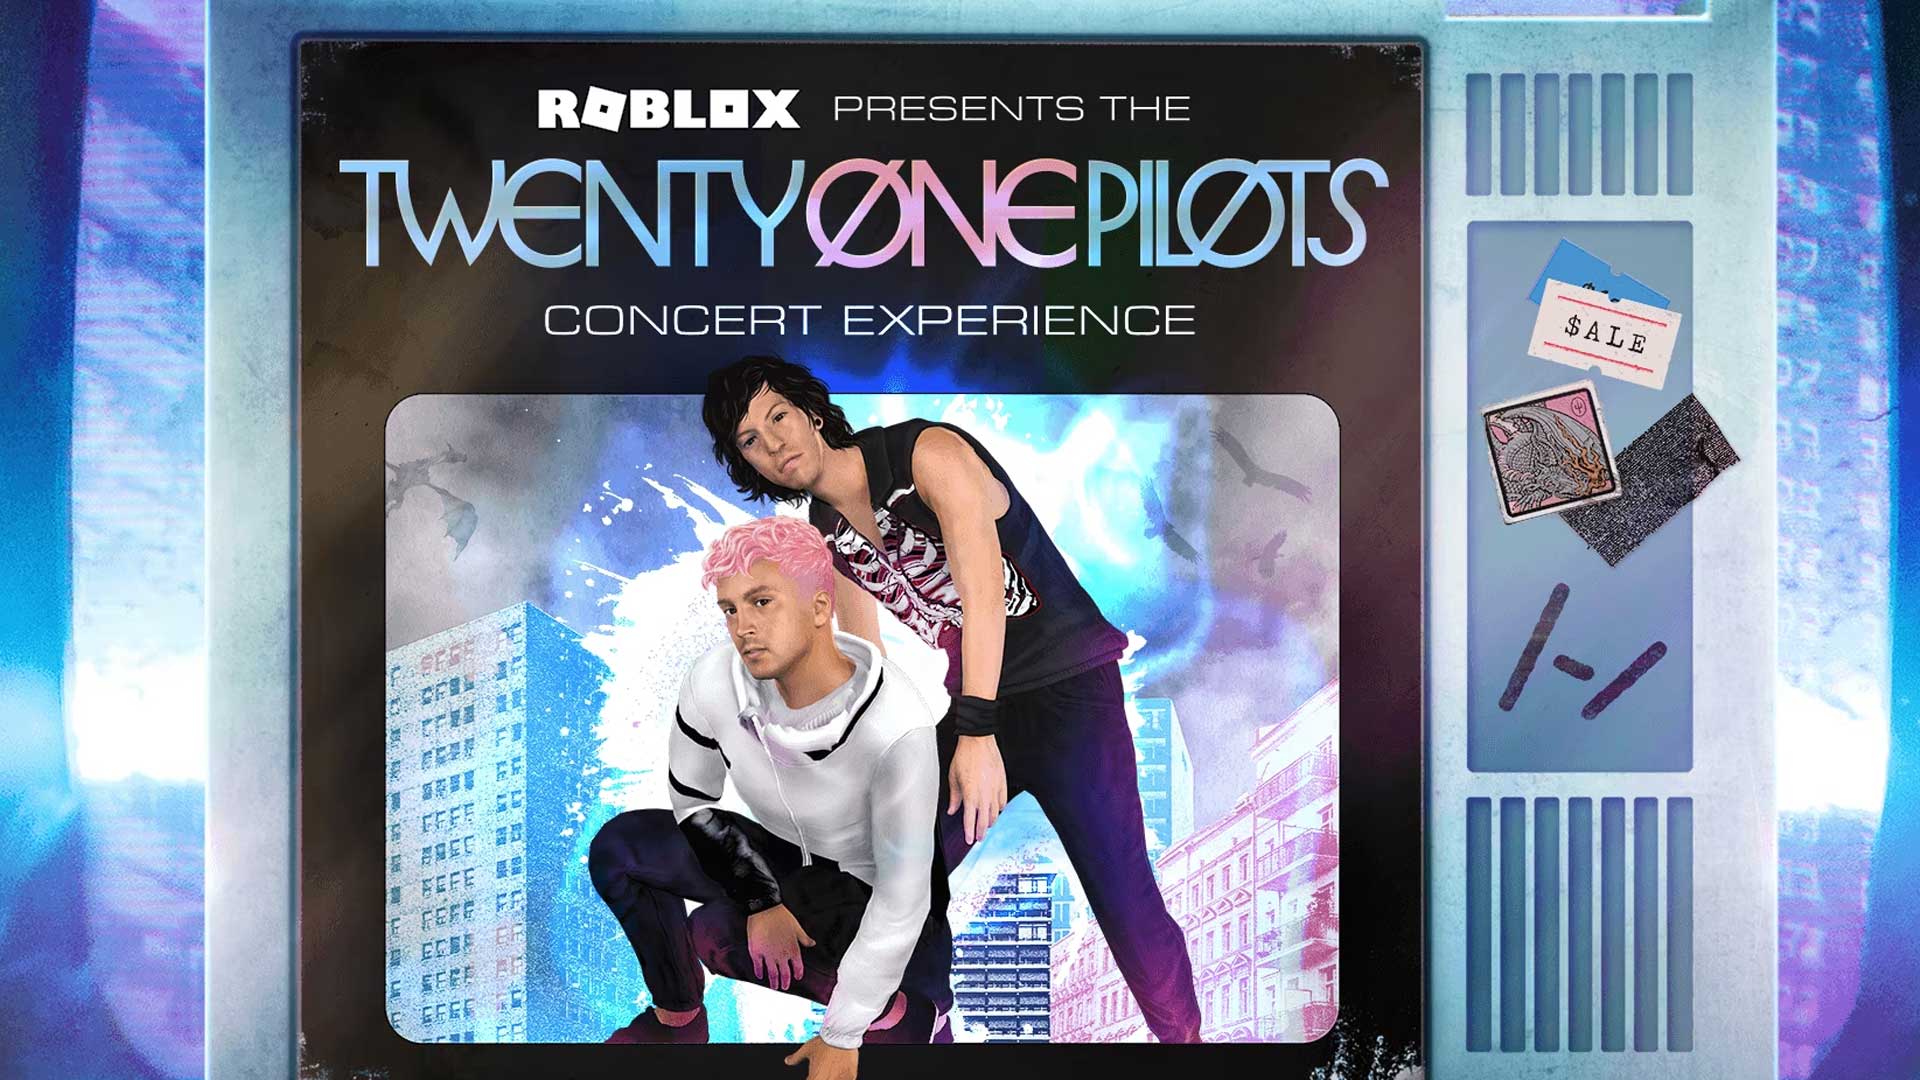 Roblox Twenty One Pilots Concert Experience schedule, how to watch